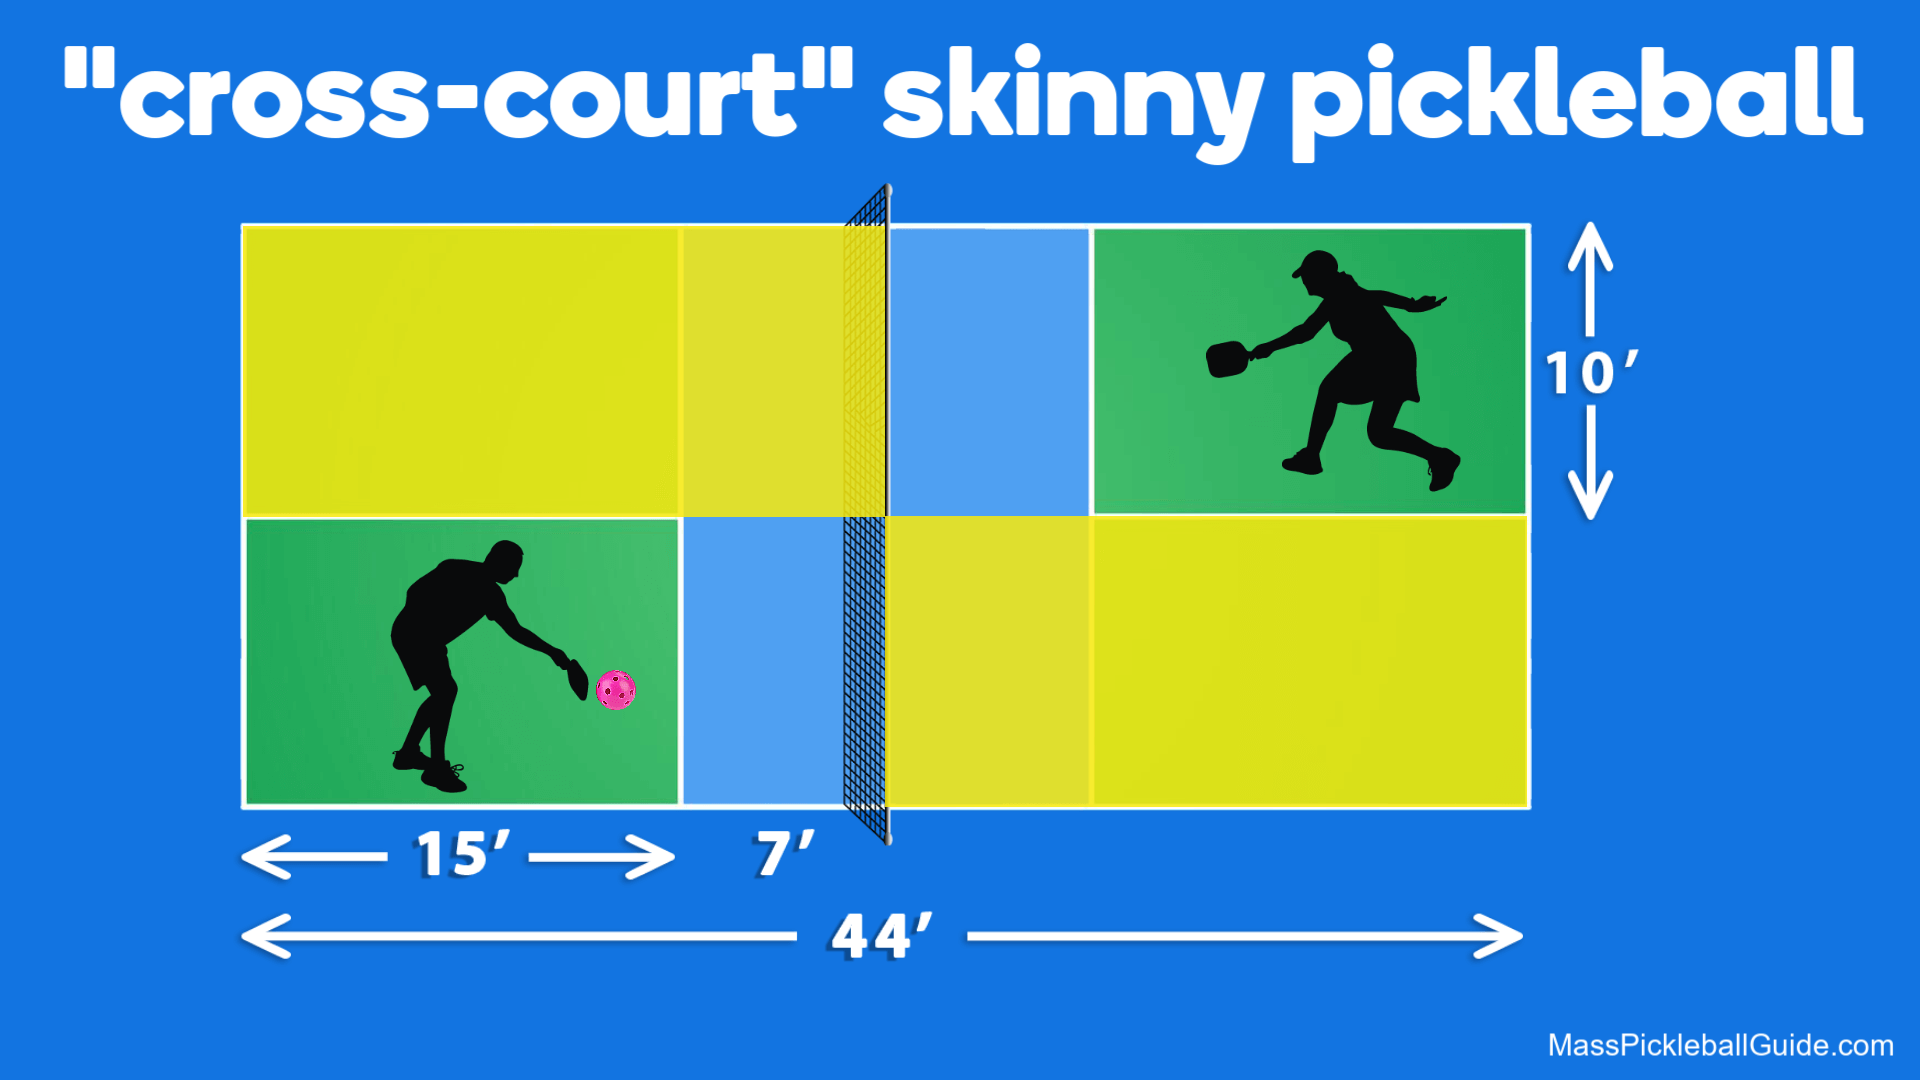 Skinny singles pickleball: unlock the thrills of a narrower court